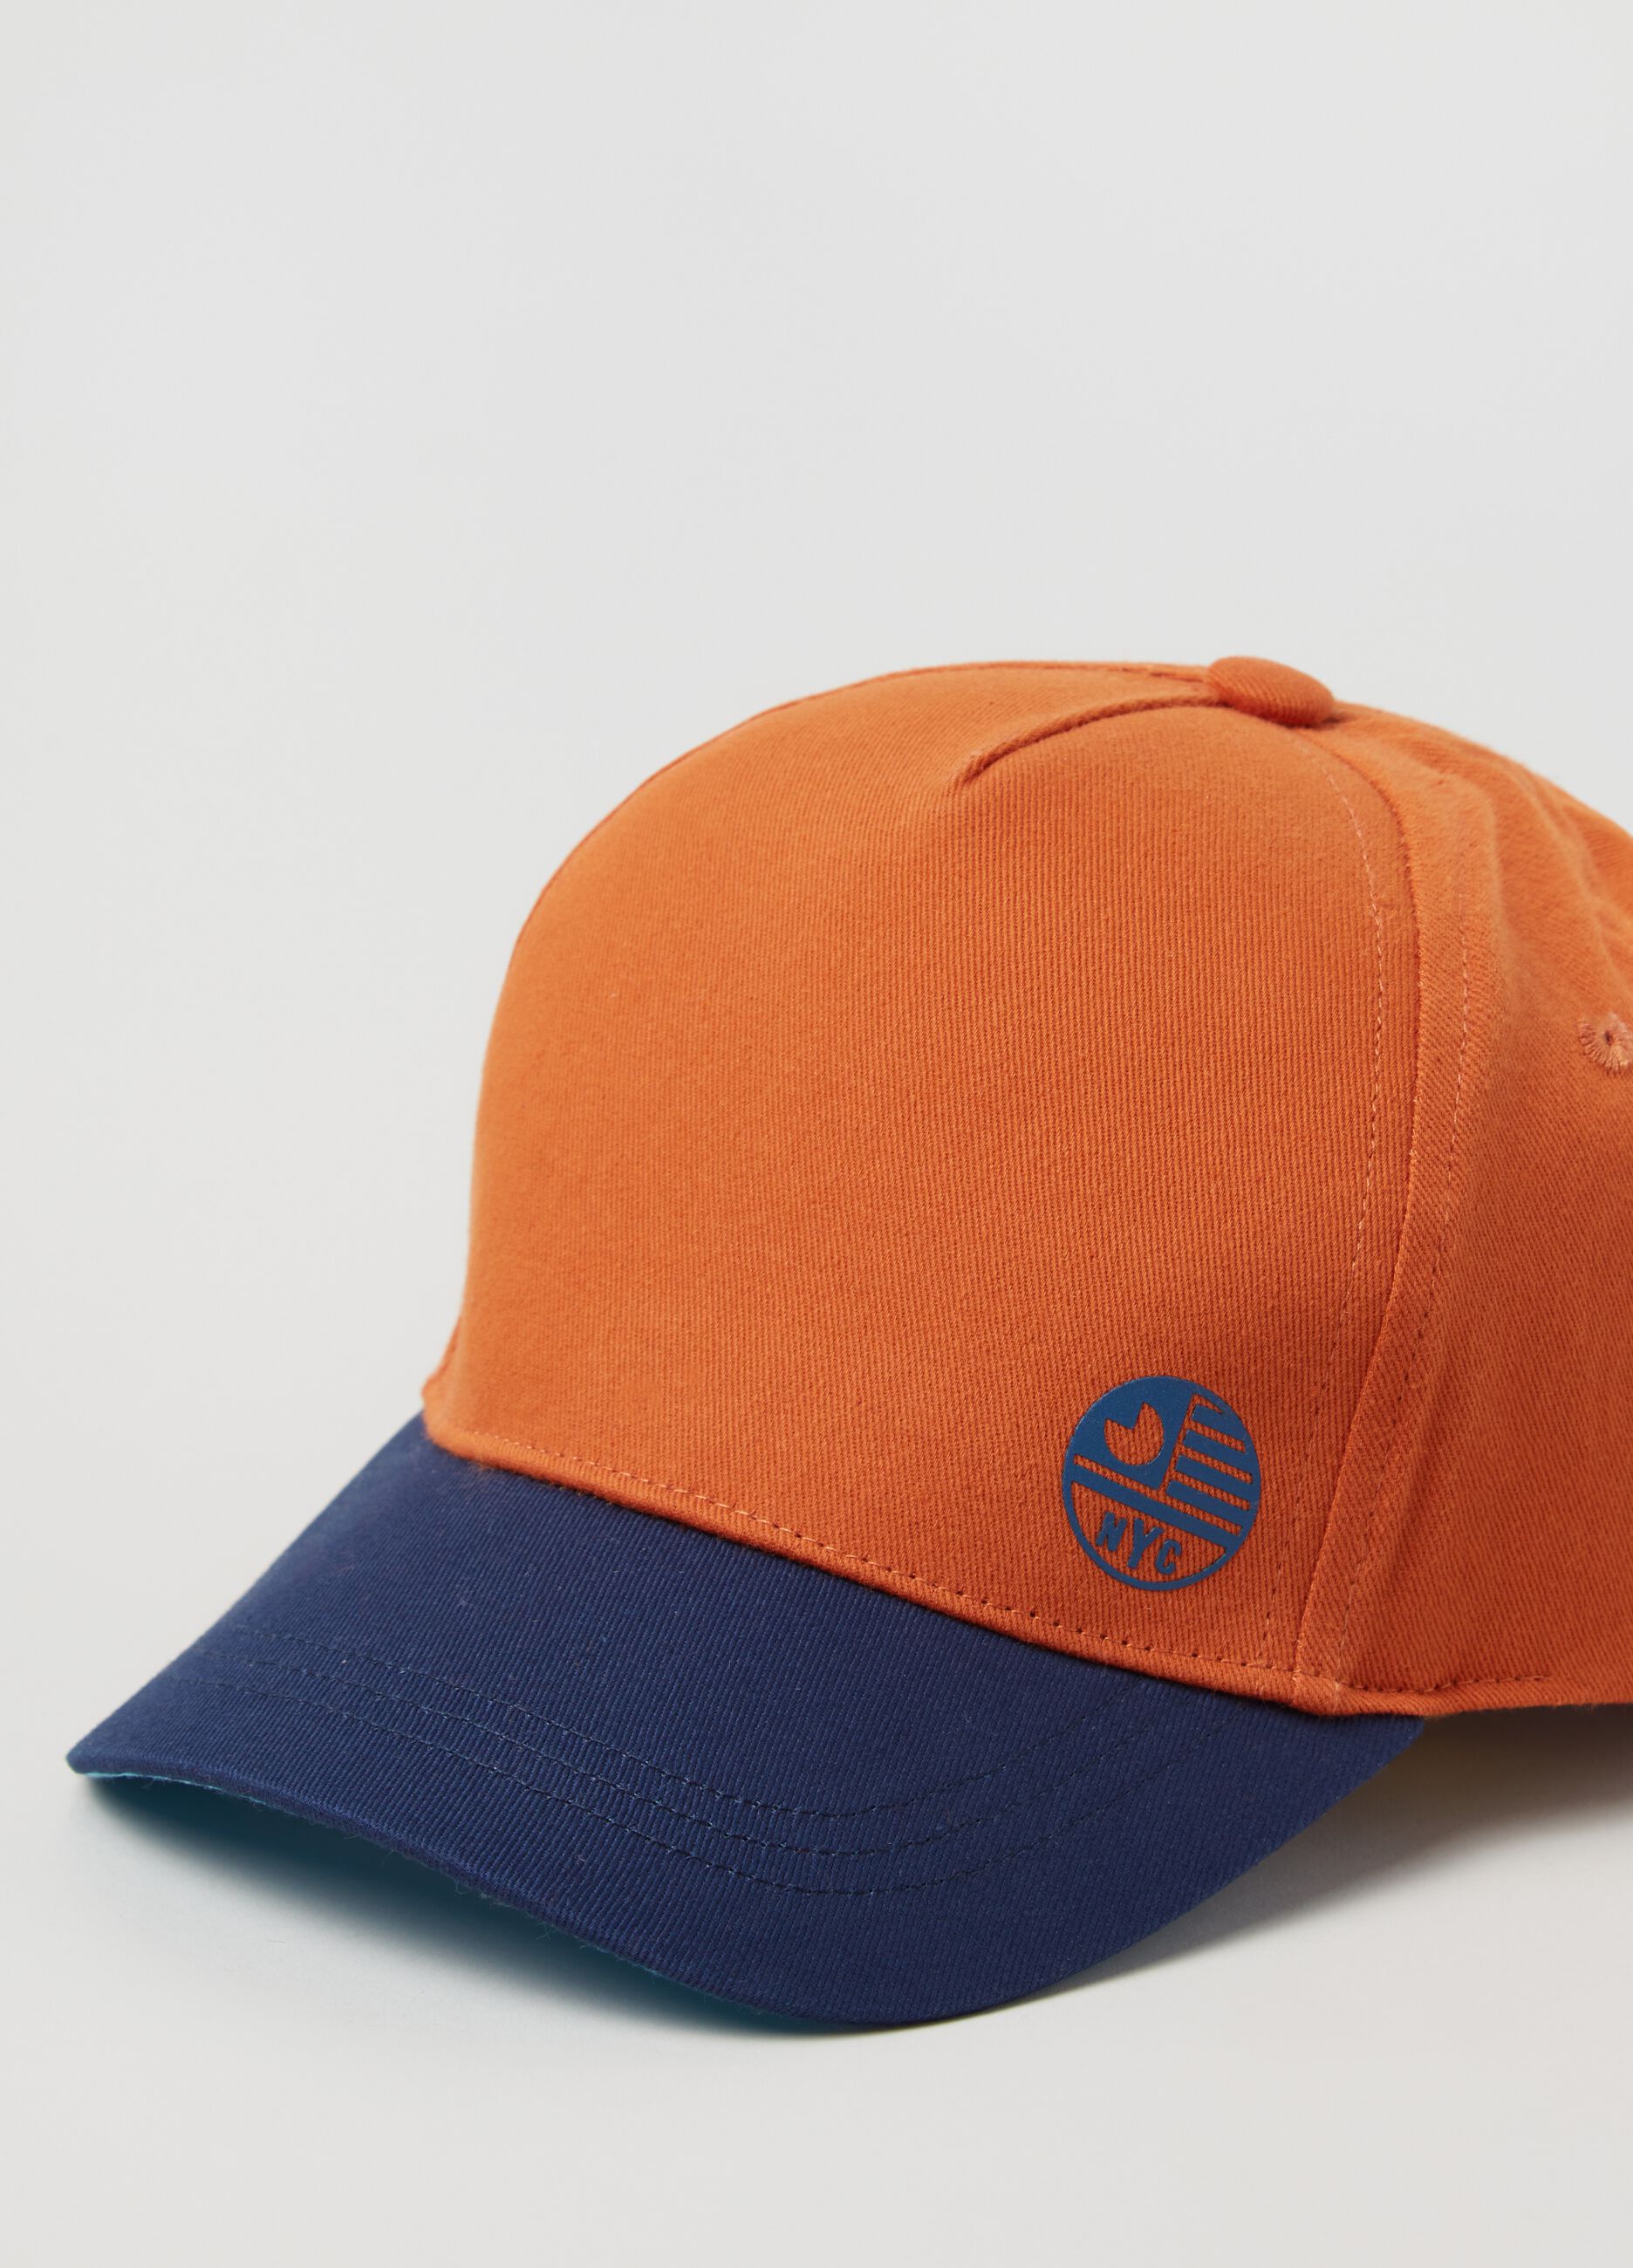 Baseball cap with contrasting visor